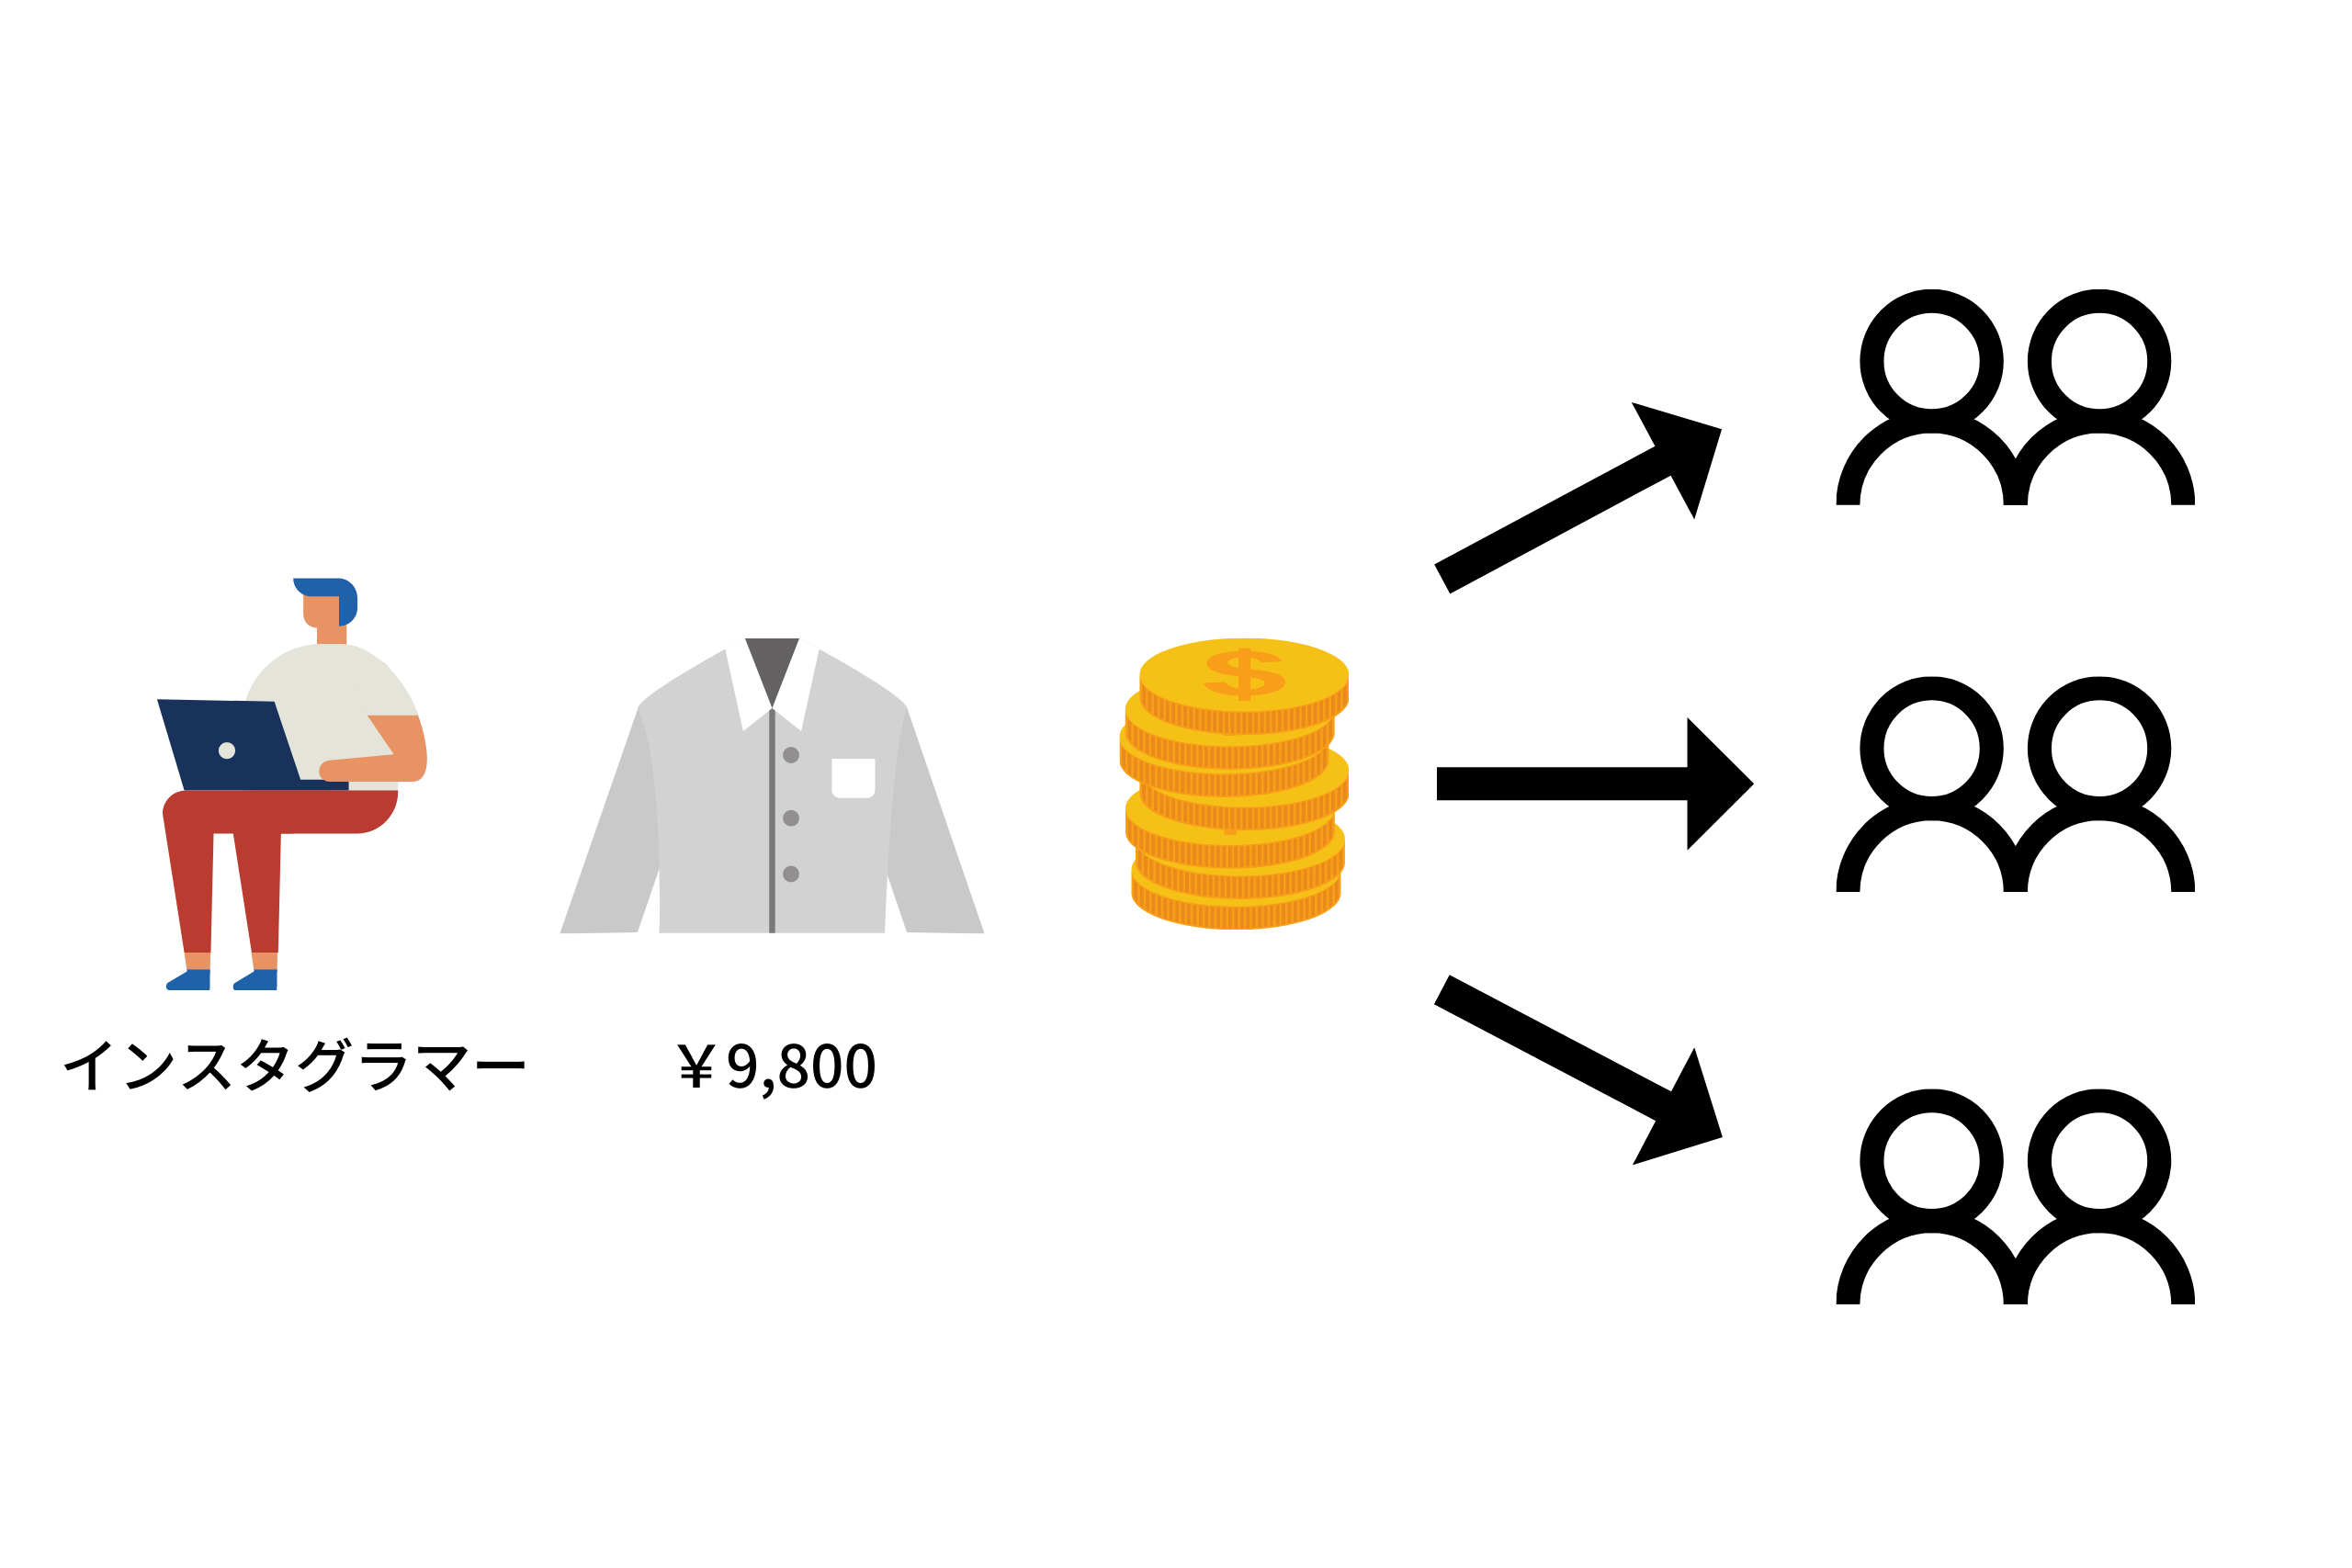 Product sales illustration